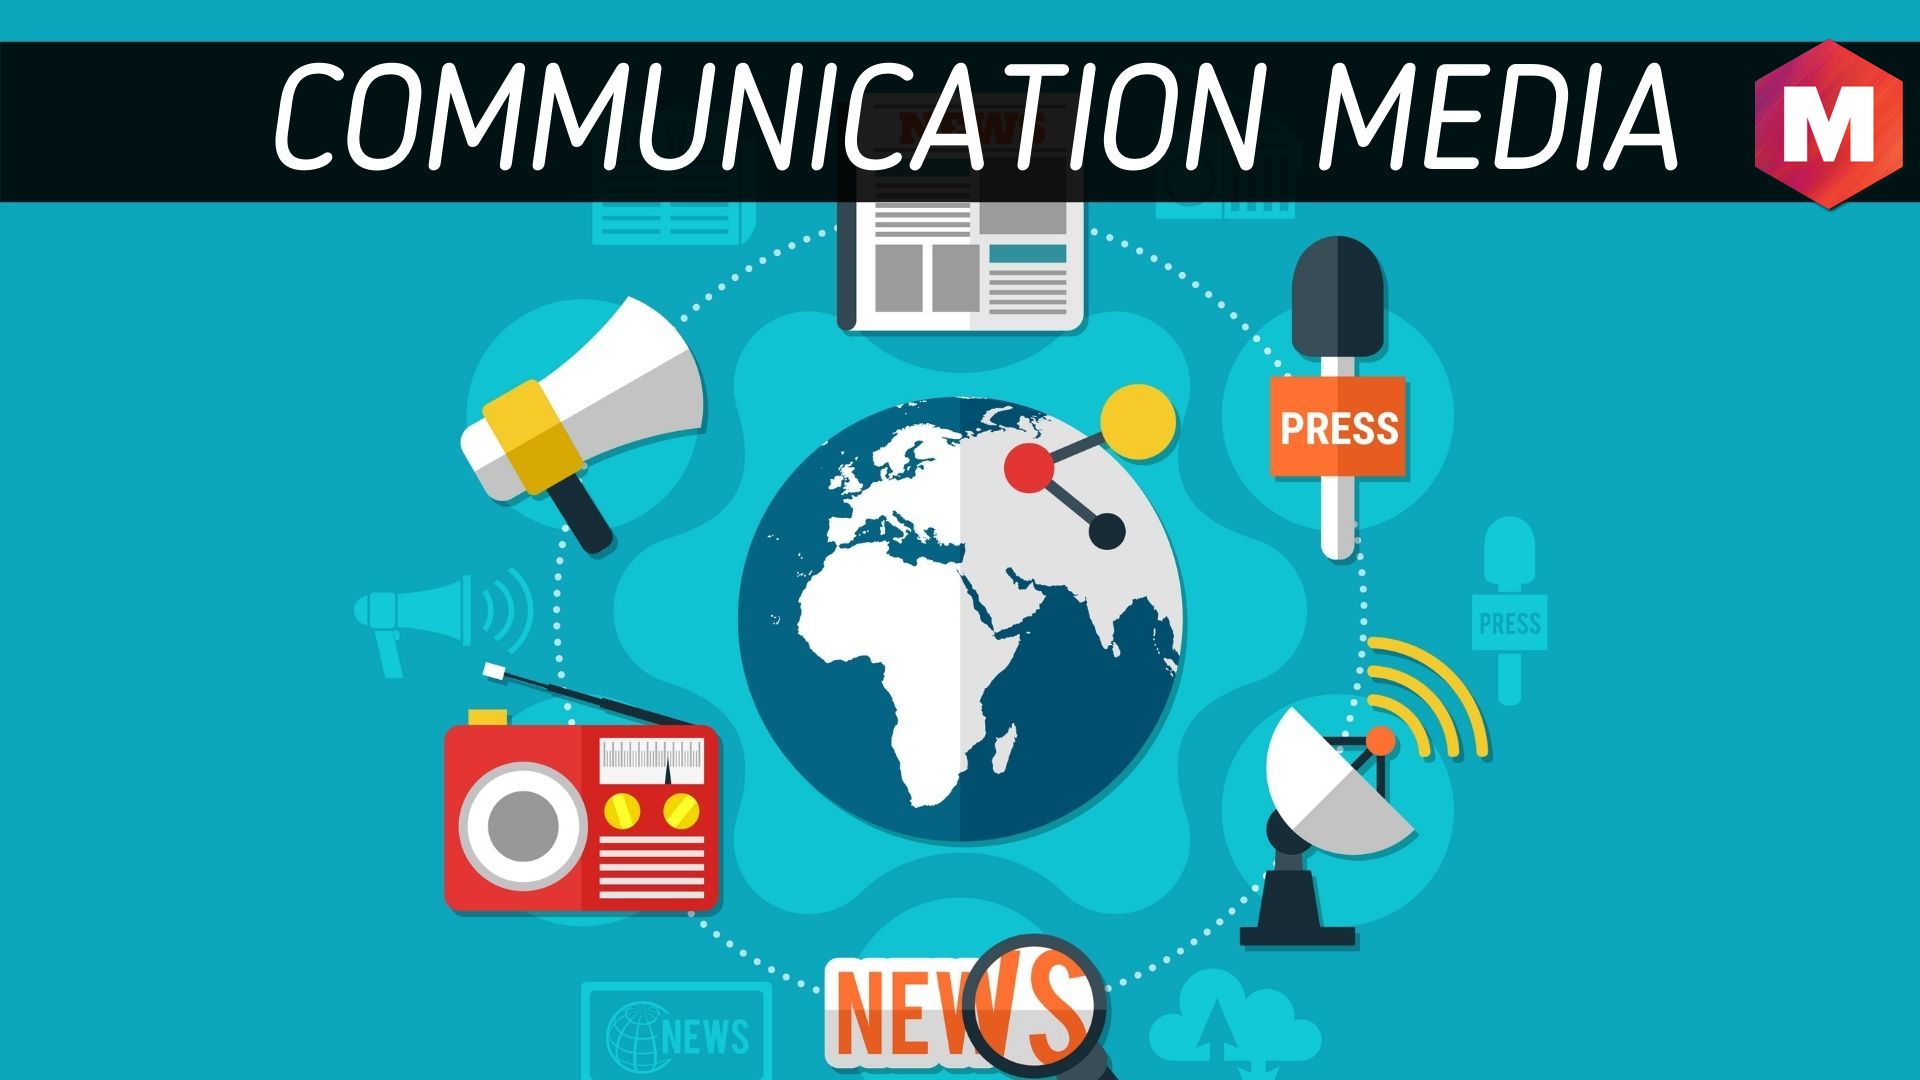 communication media presentation